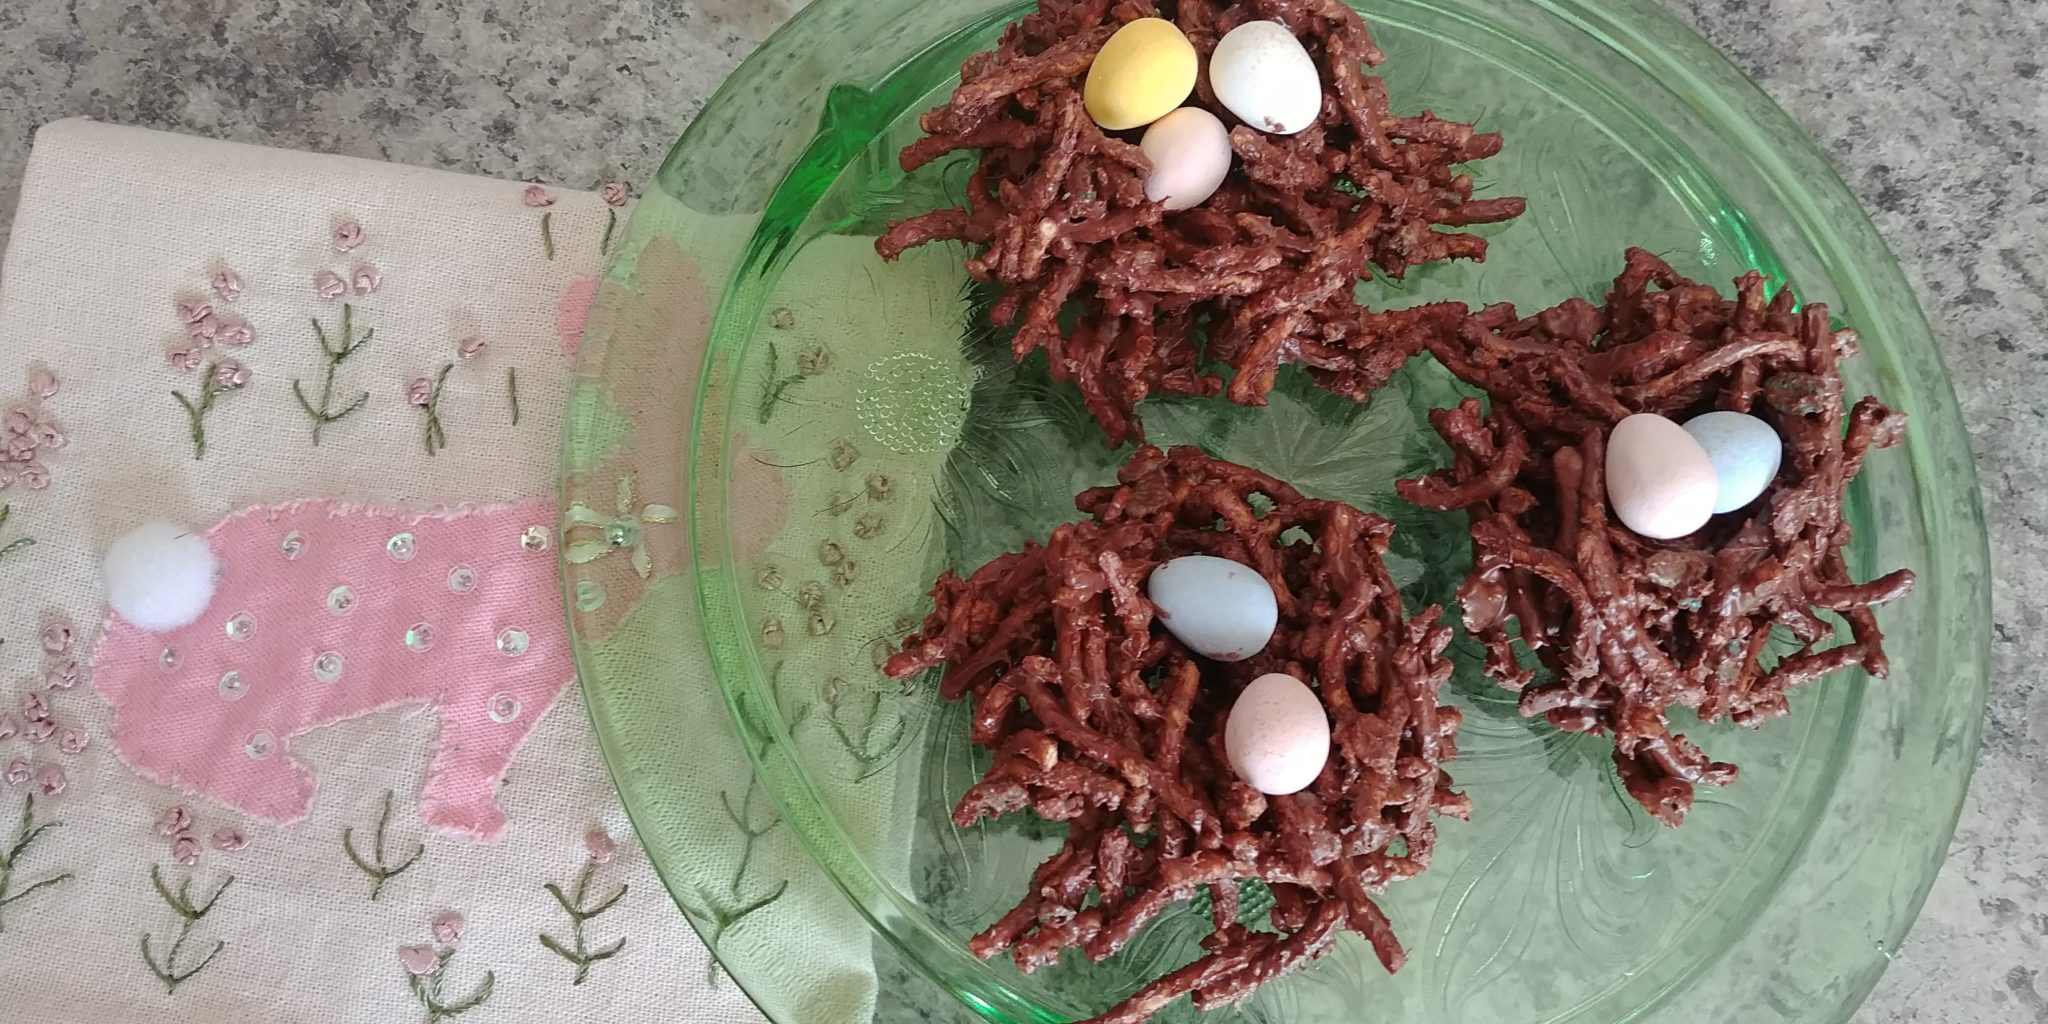 Chocolate Nests